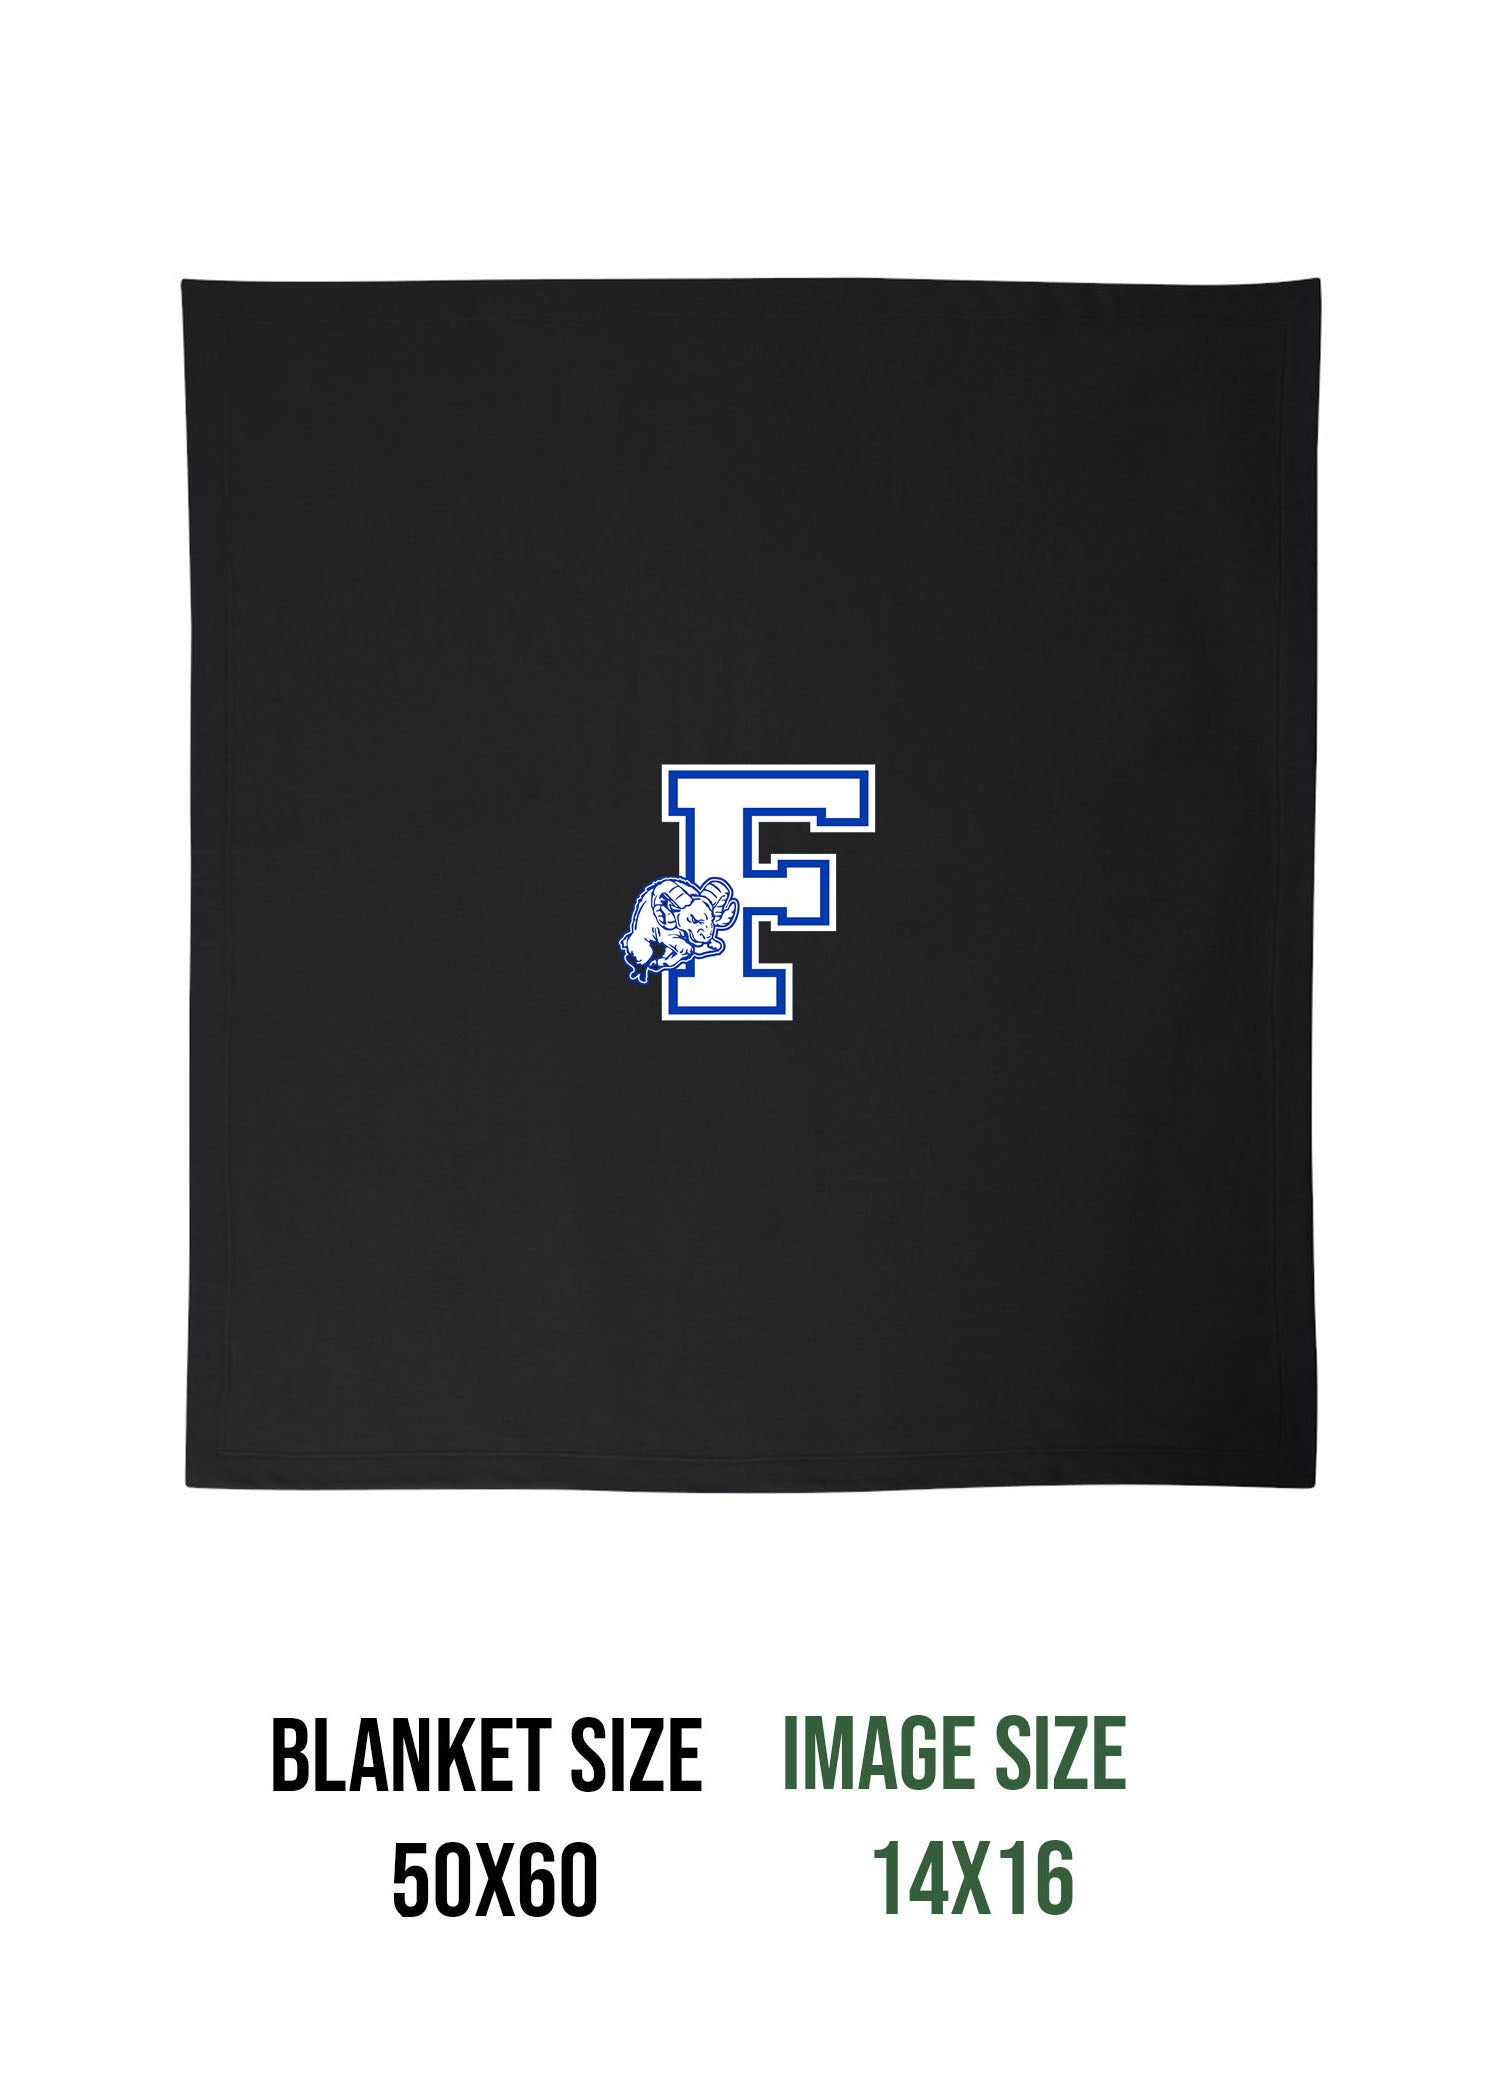 Franklin School Design 1 Blanket